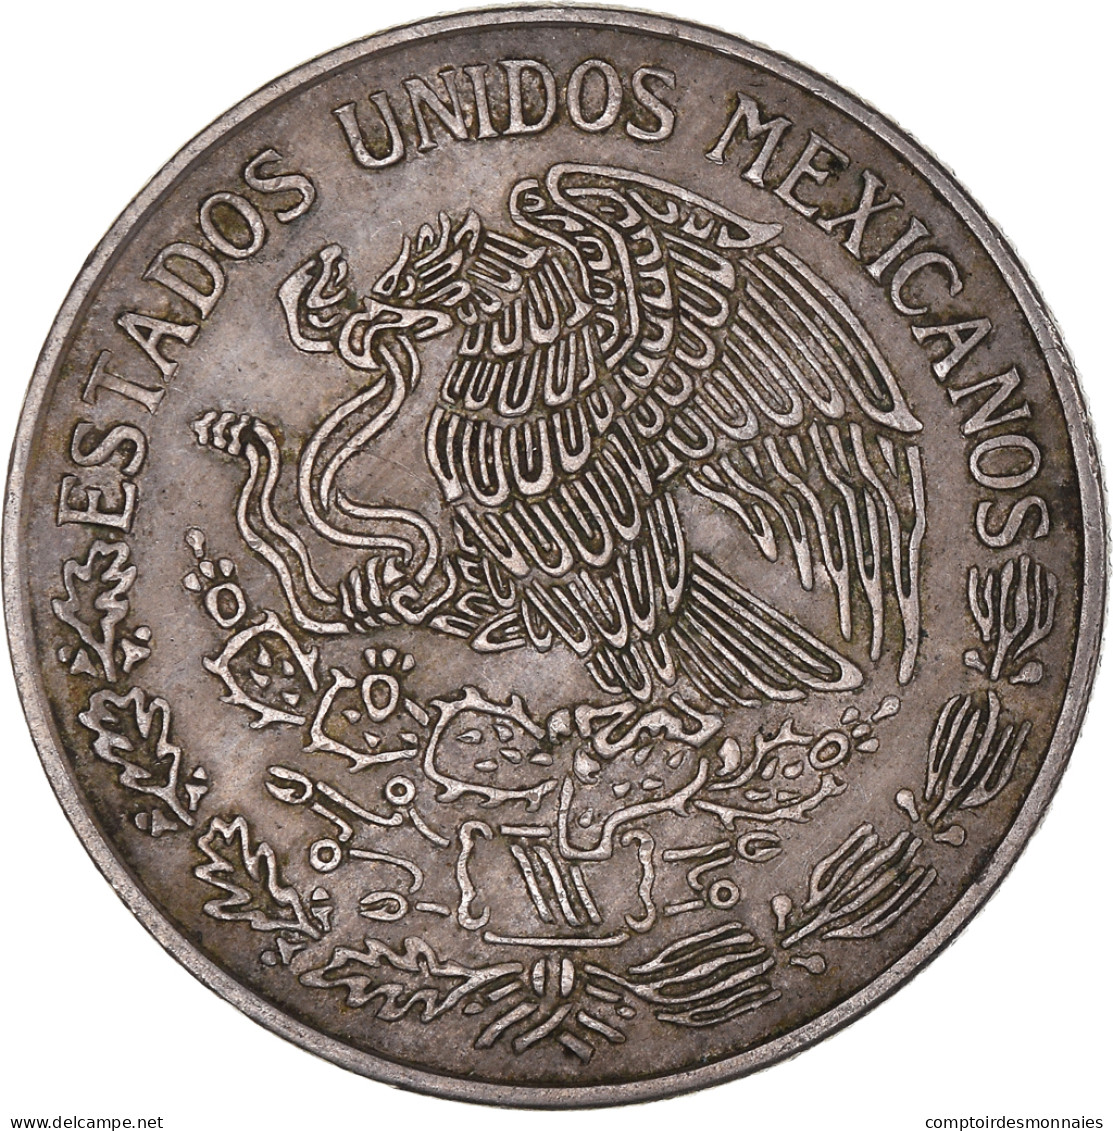 Monnaie, Mexique, Peso, 1972 - Mexique